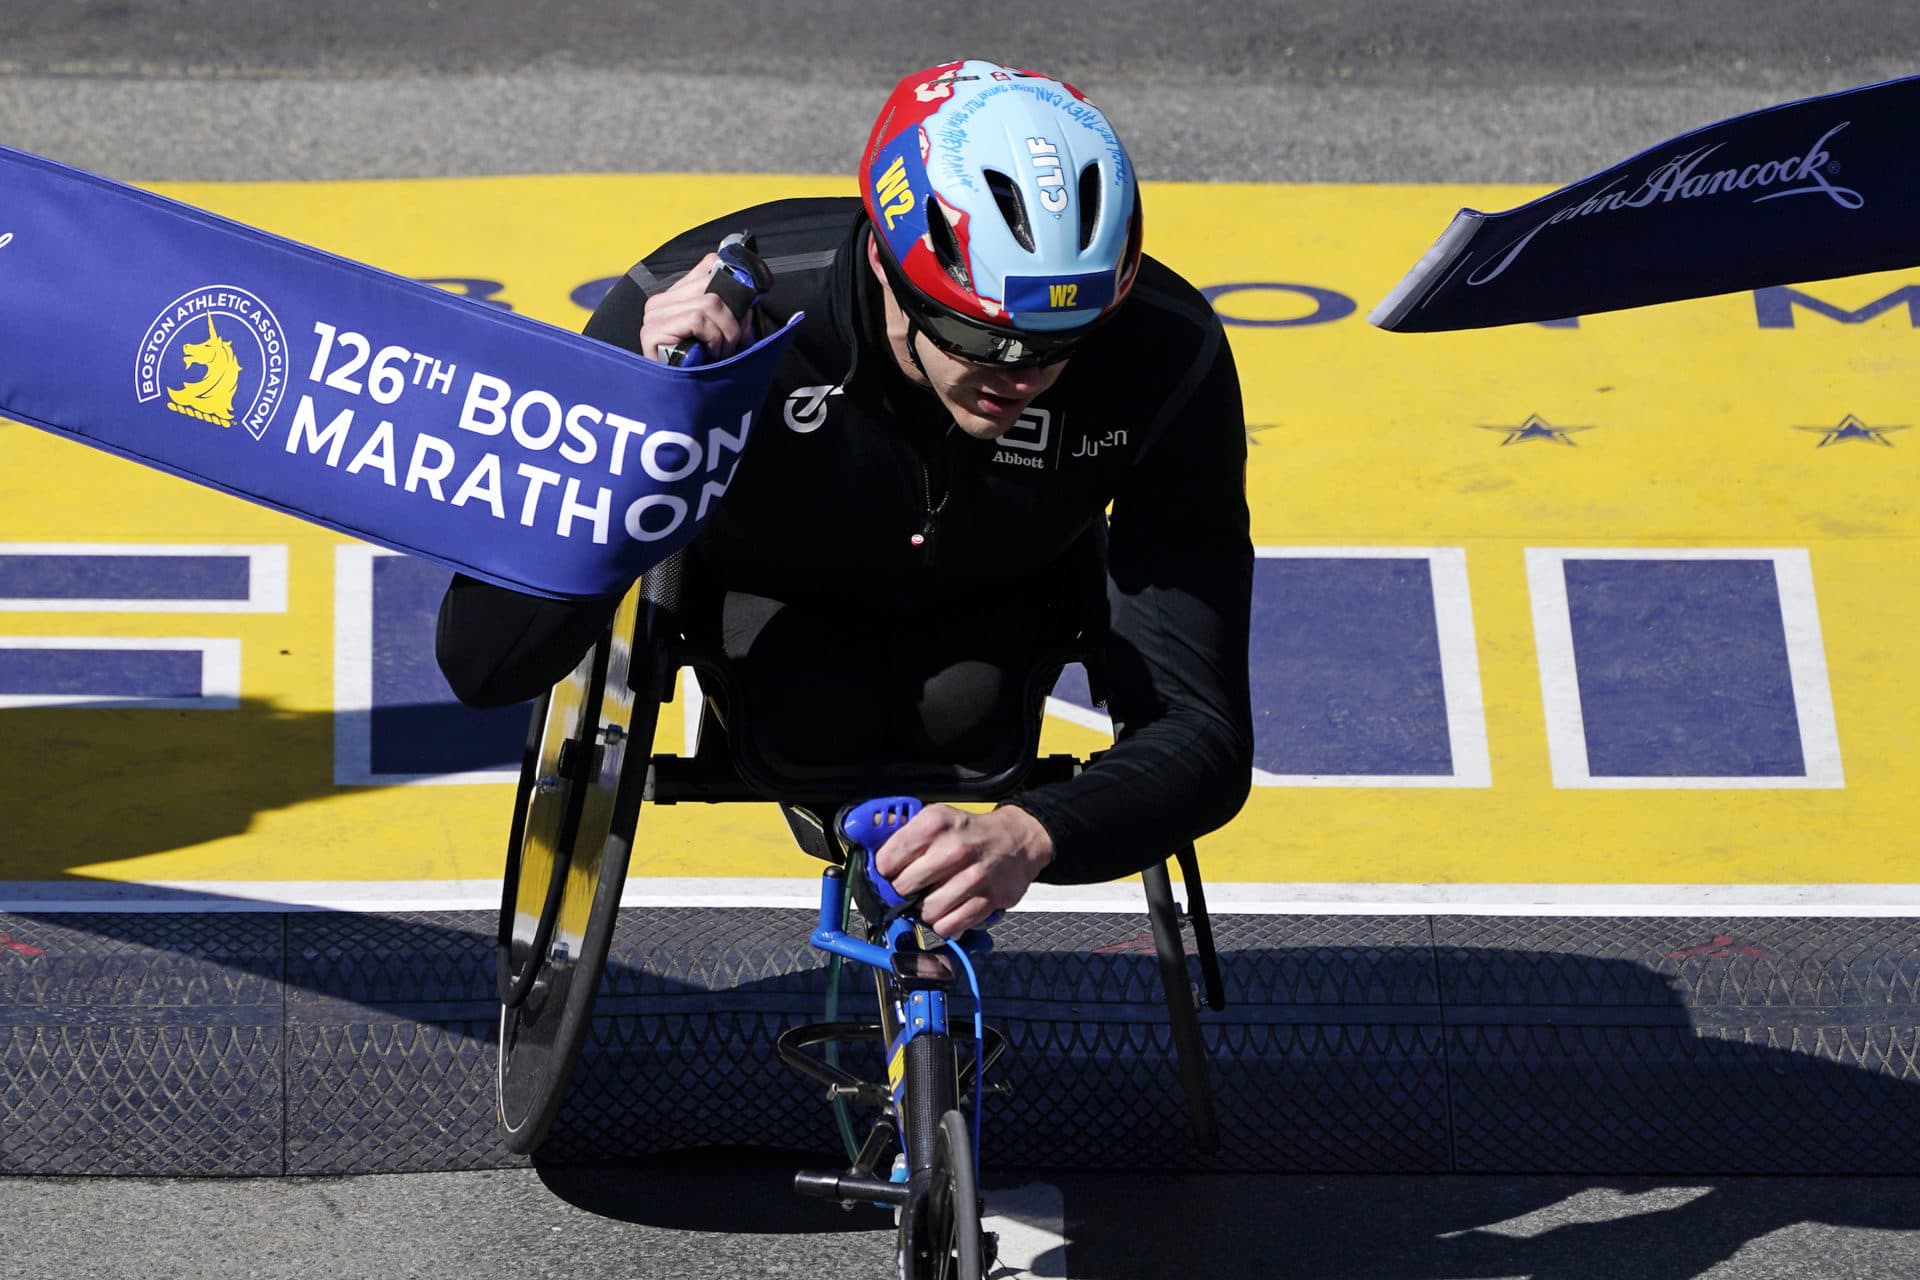 Daniel Romanchuk, of the United States, breaks the tape to win the men's wheelchair division of the Boston Marathon, Monday, April 18, 2022, in Boston. (Charles Krupa/AP)